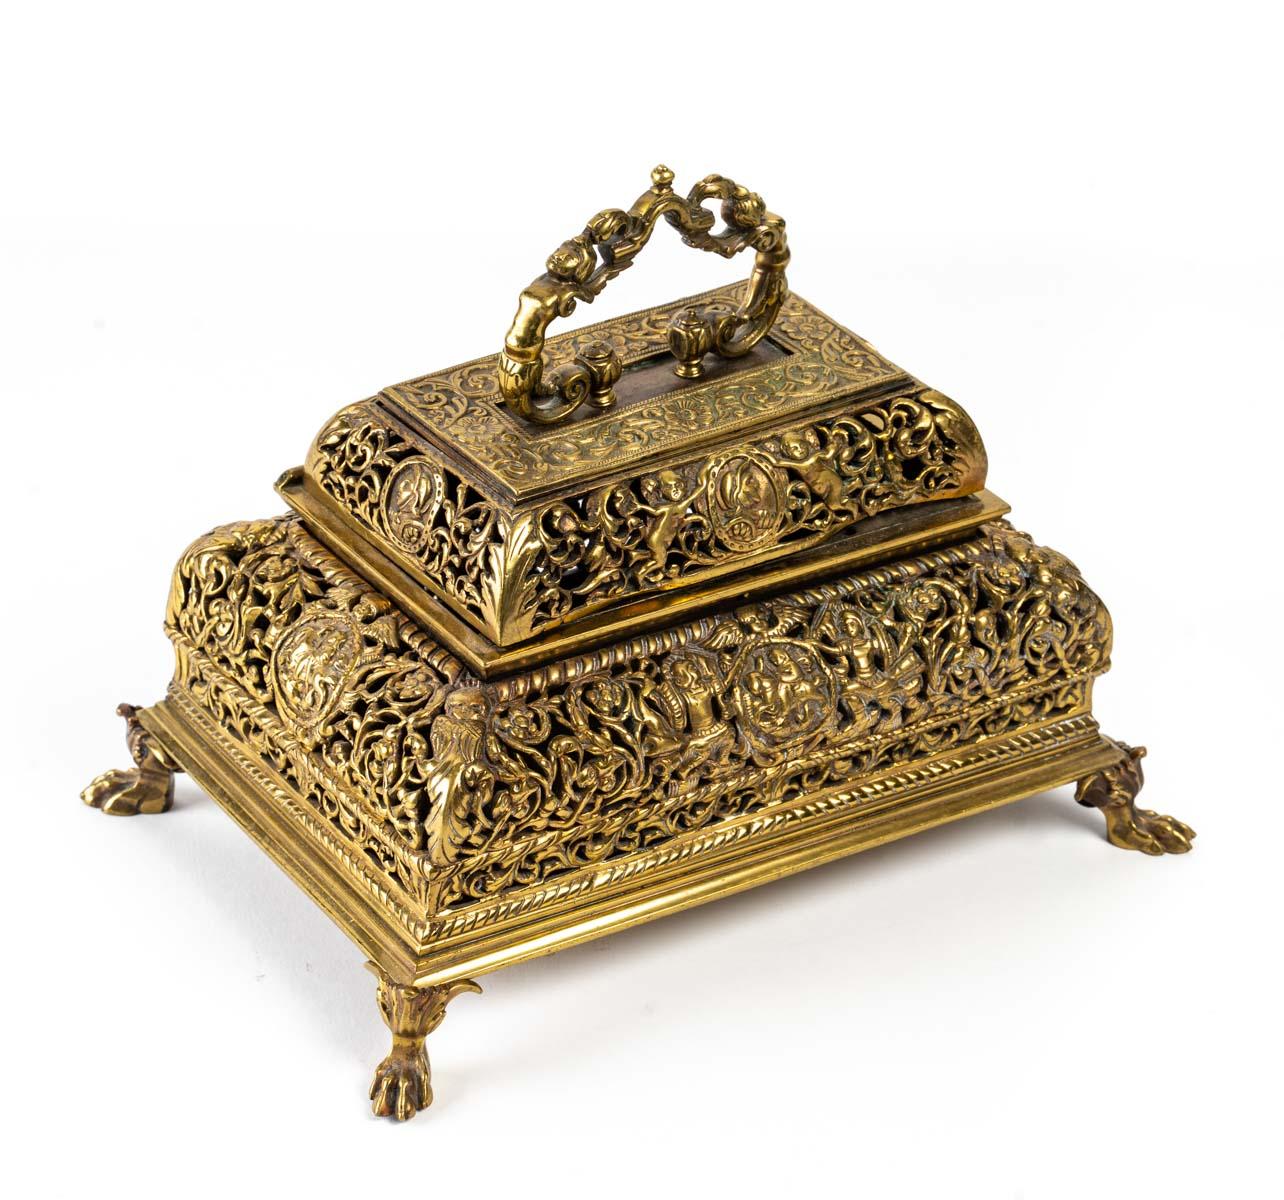 Bronze box, Napoleon III period, 19th century.
Measures: H 20 cm, W 27 cm, D 19 cm.